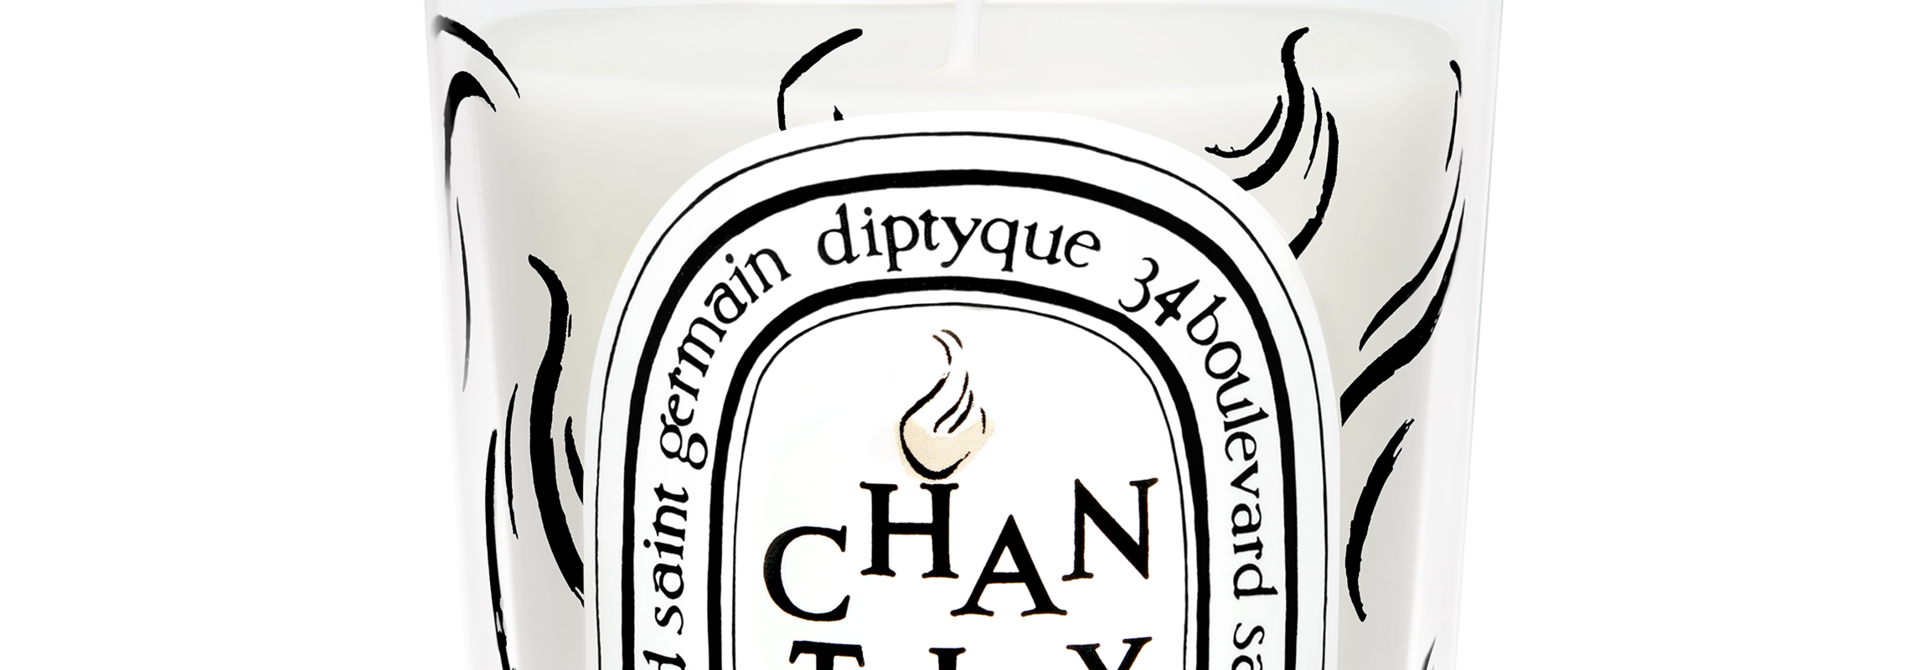 Candle Chantilly 190gr Café Verlet Limited Edition